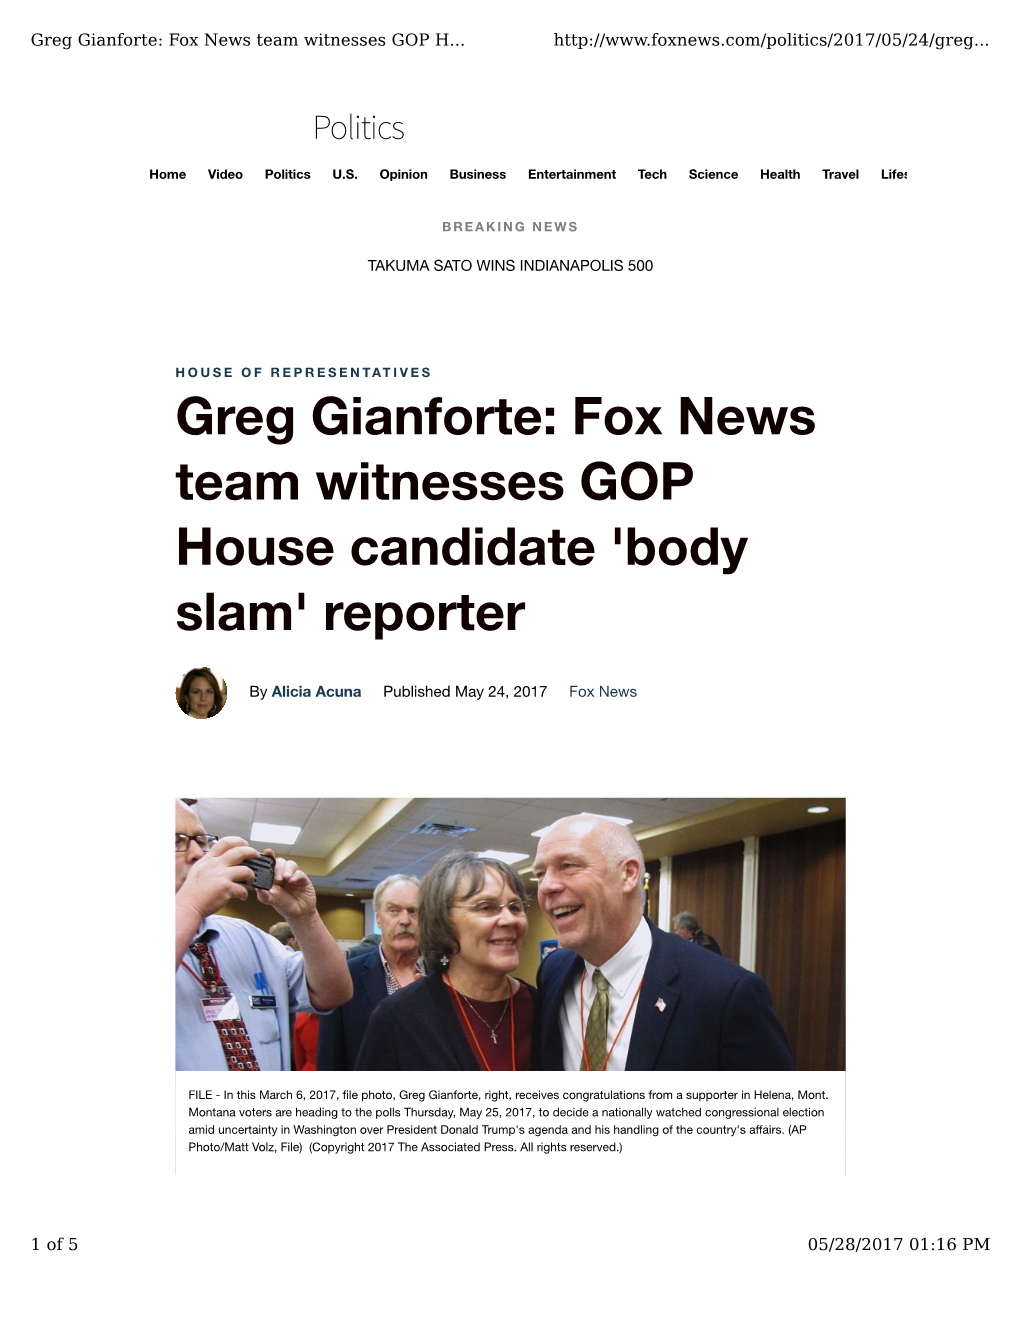 Greg Gianforte: Fox News Team Witnesses GOP House Candidate 'Body Slam' Reporter